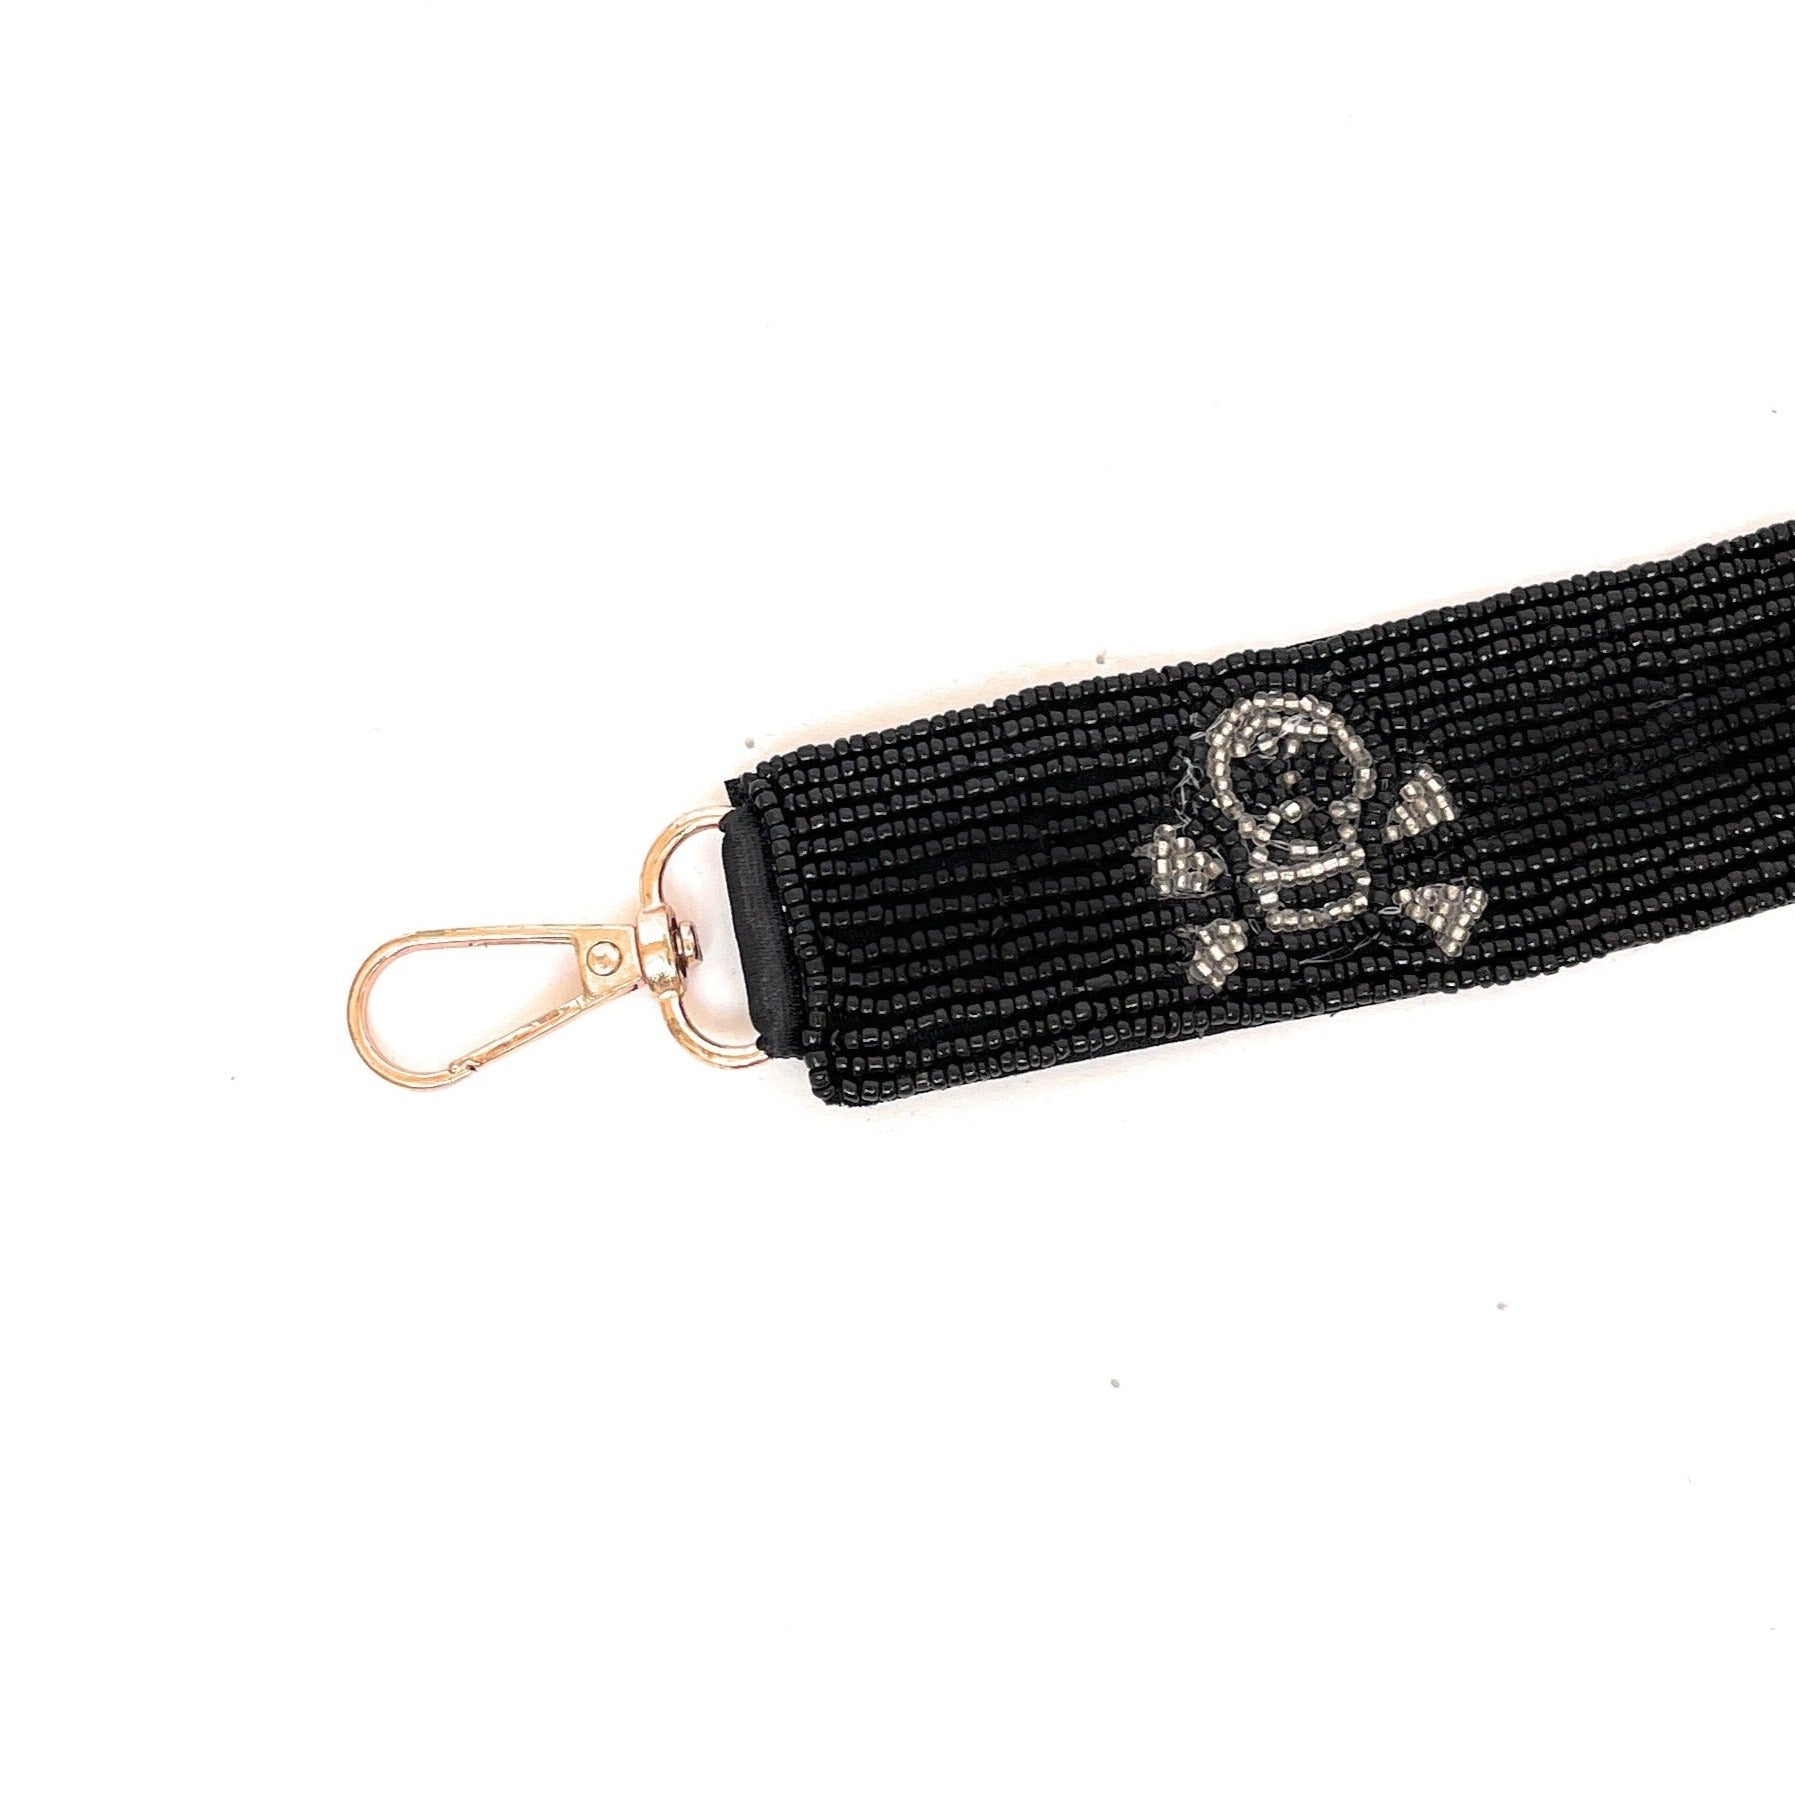 Louis Vuitton Beads Headband Black Leather